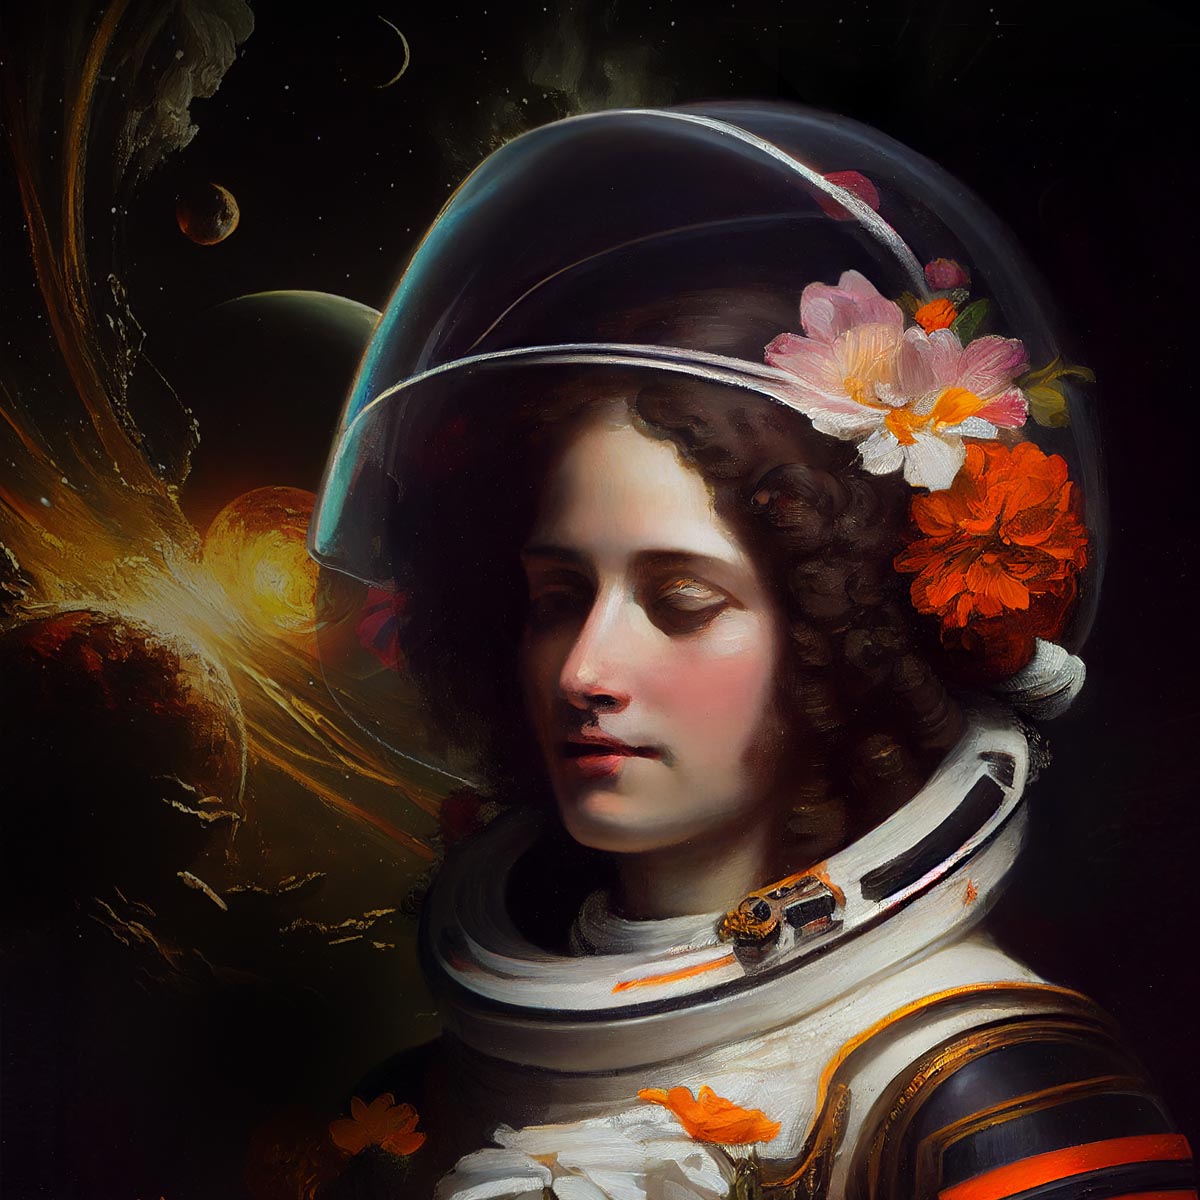 "Astronaut Beauty" LE art print